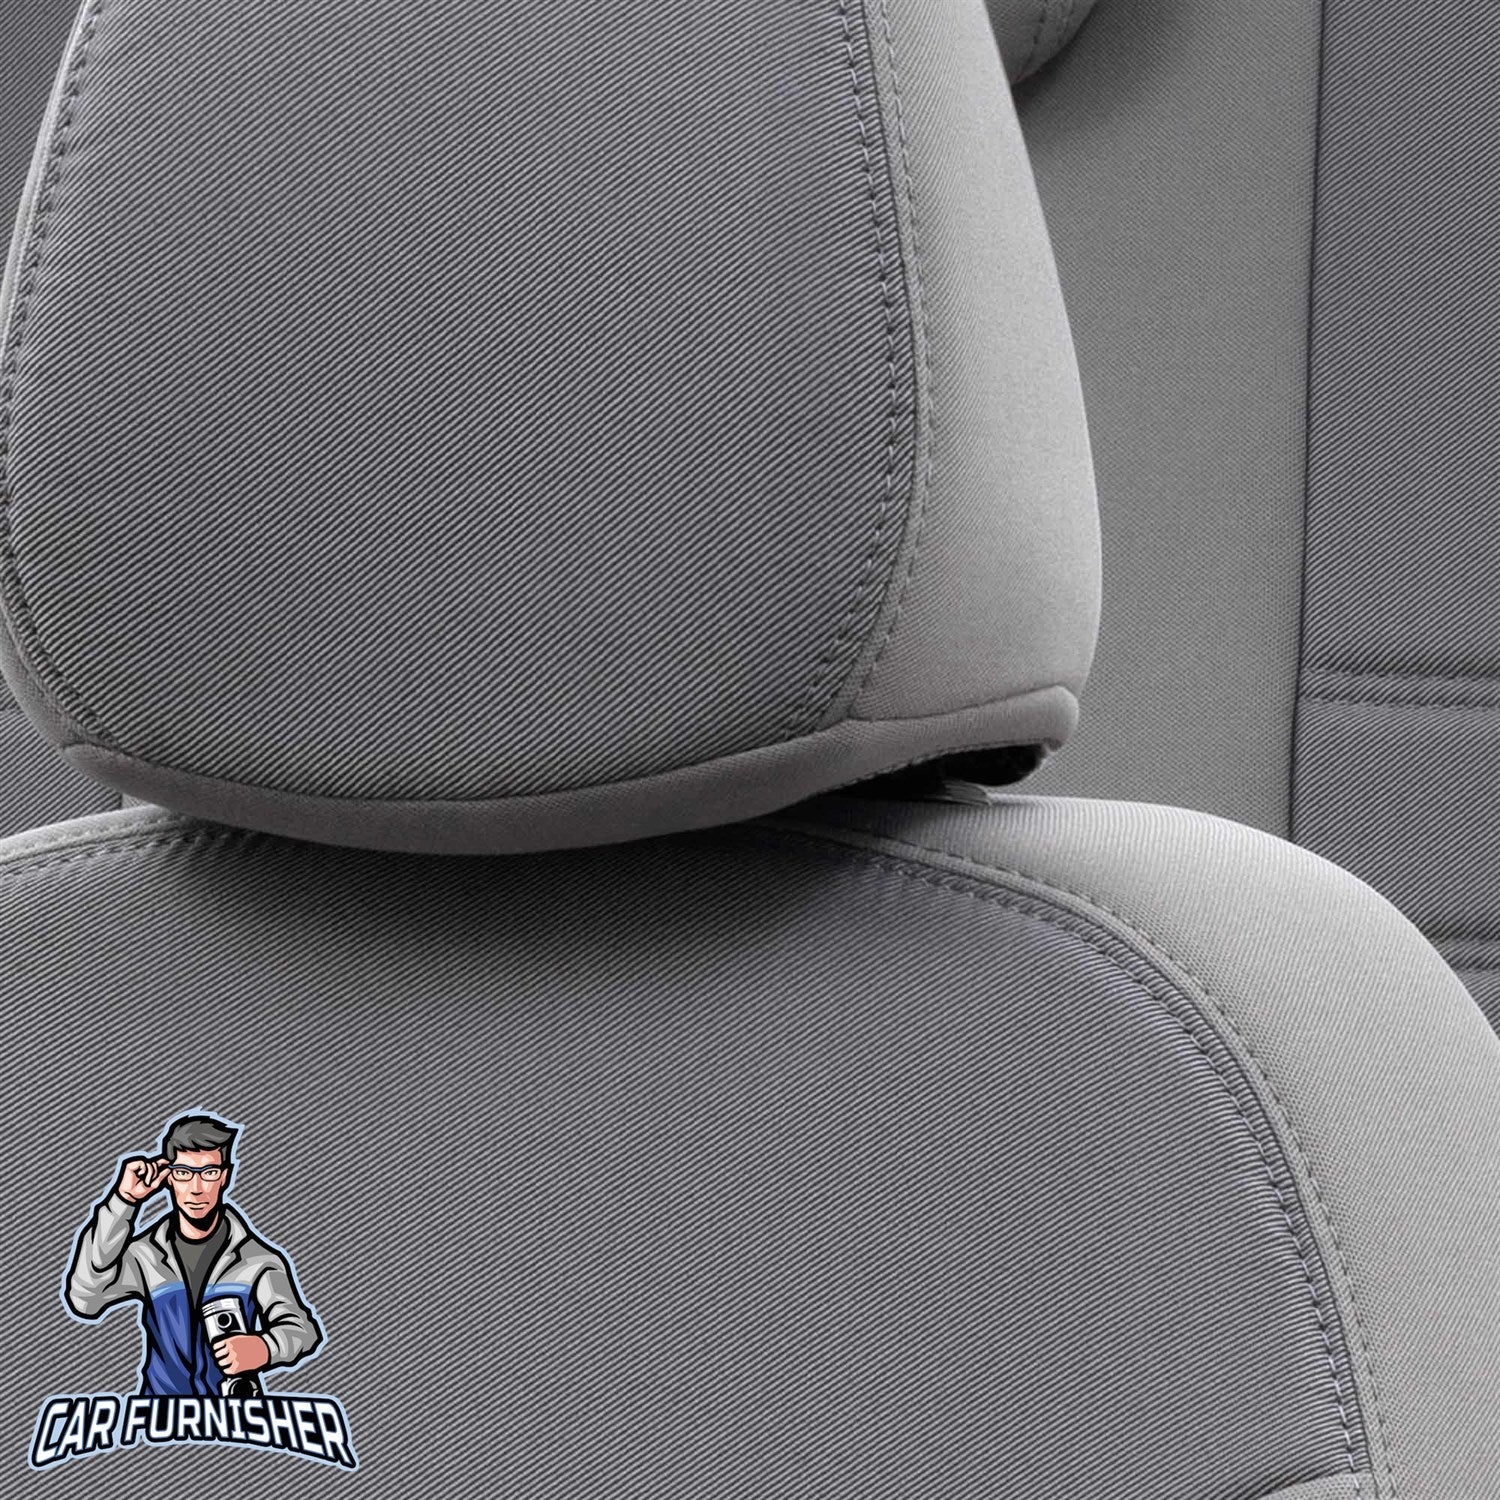 Volkswagen Golf Seat Cover Original Jacquard Design Gray Jacquard Fabric